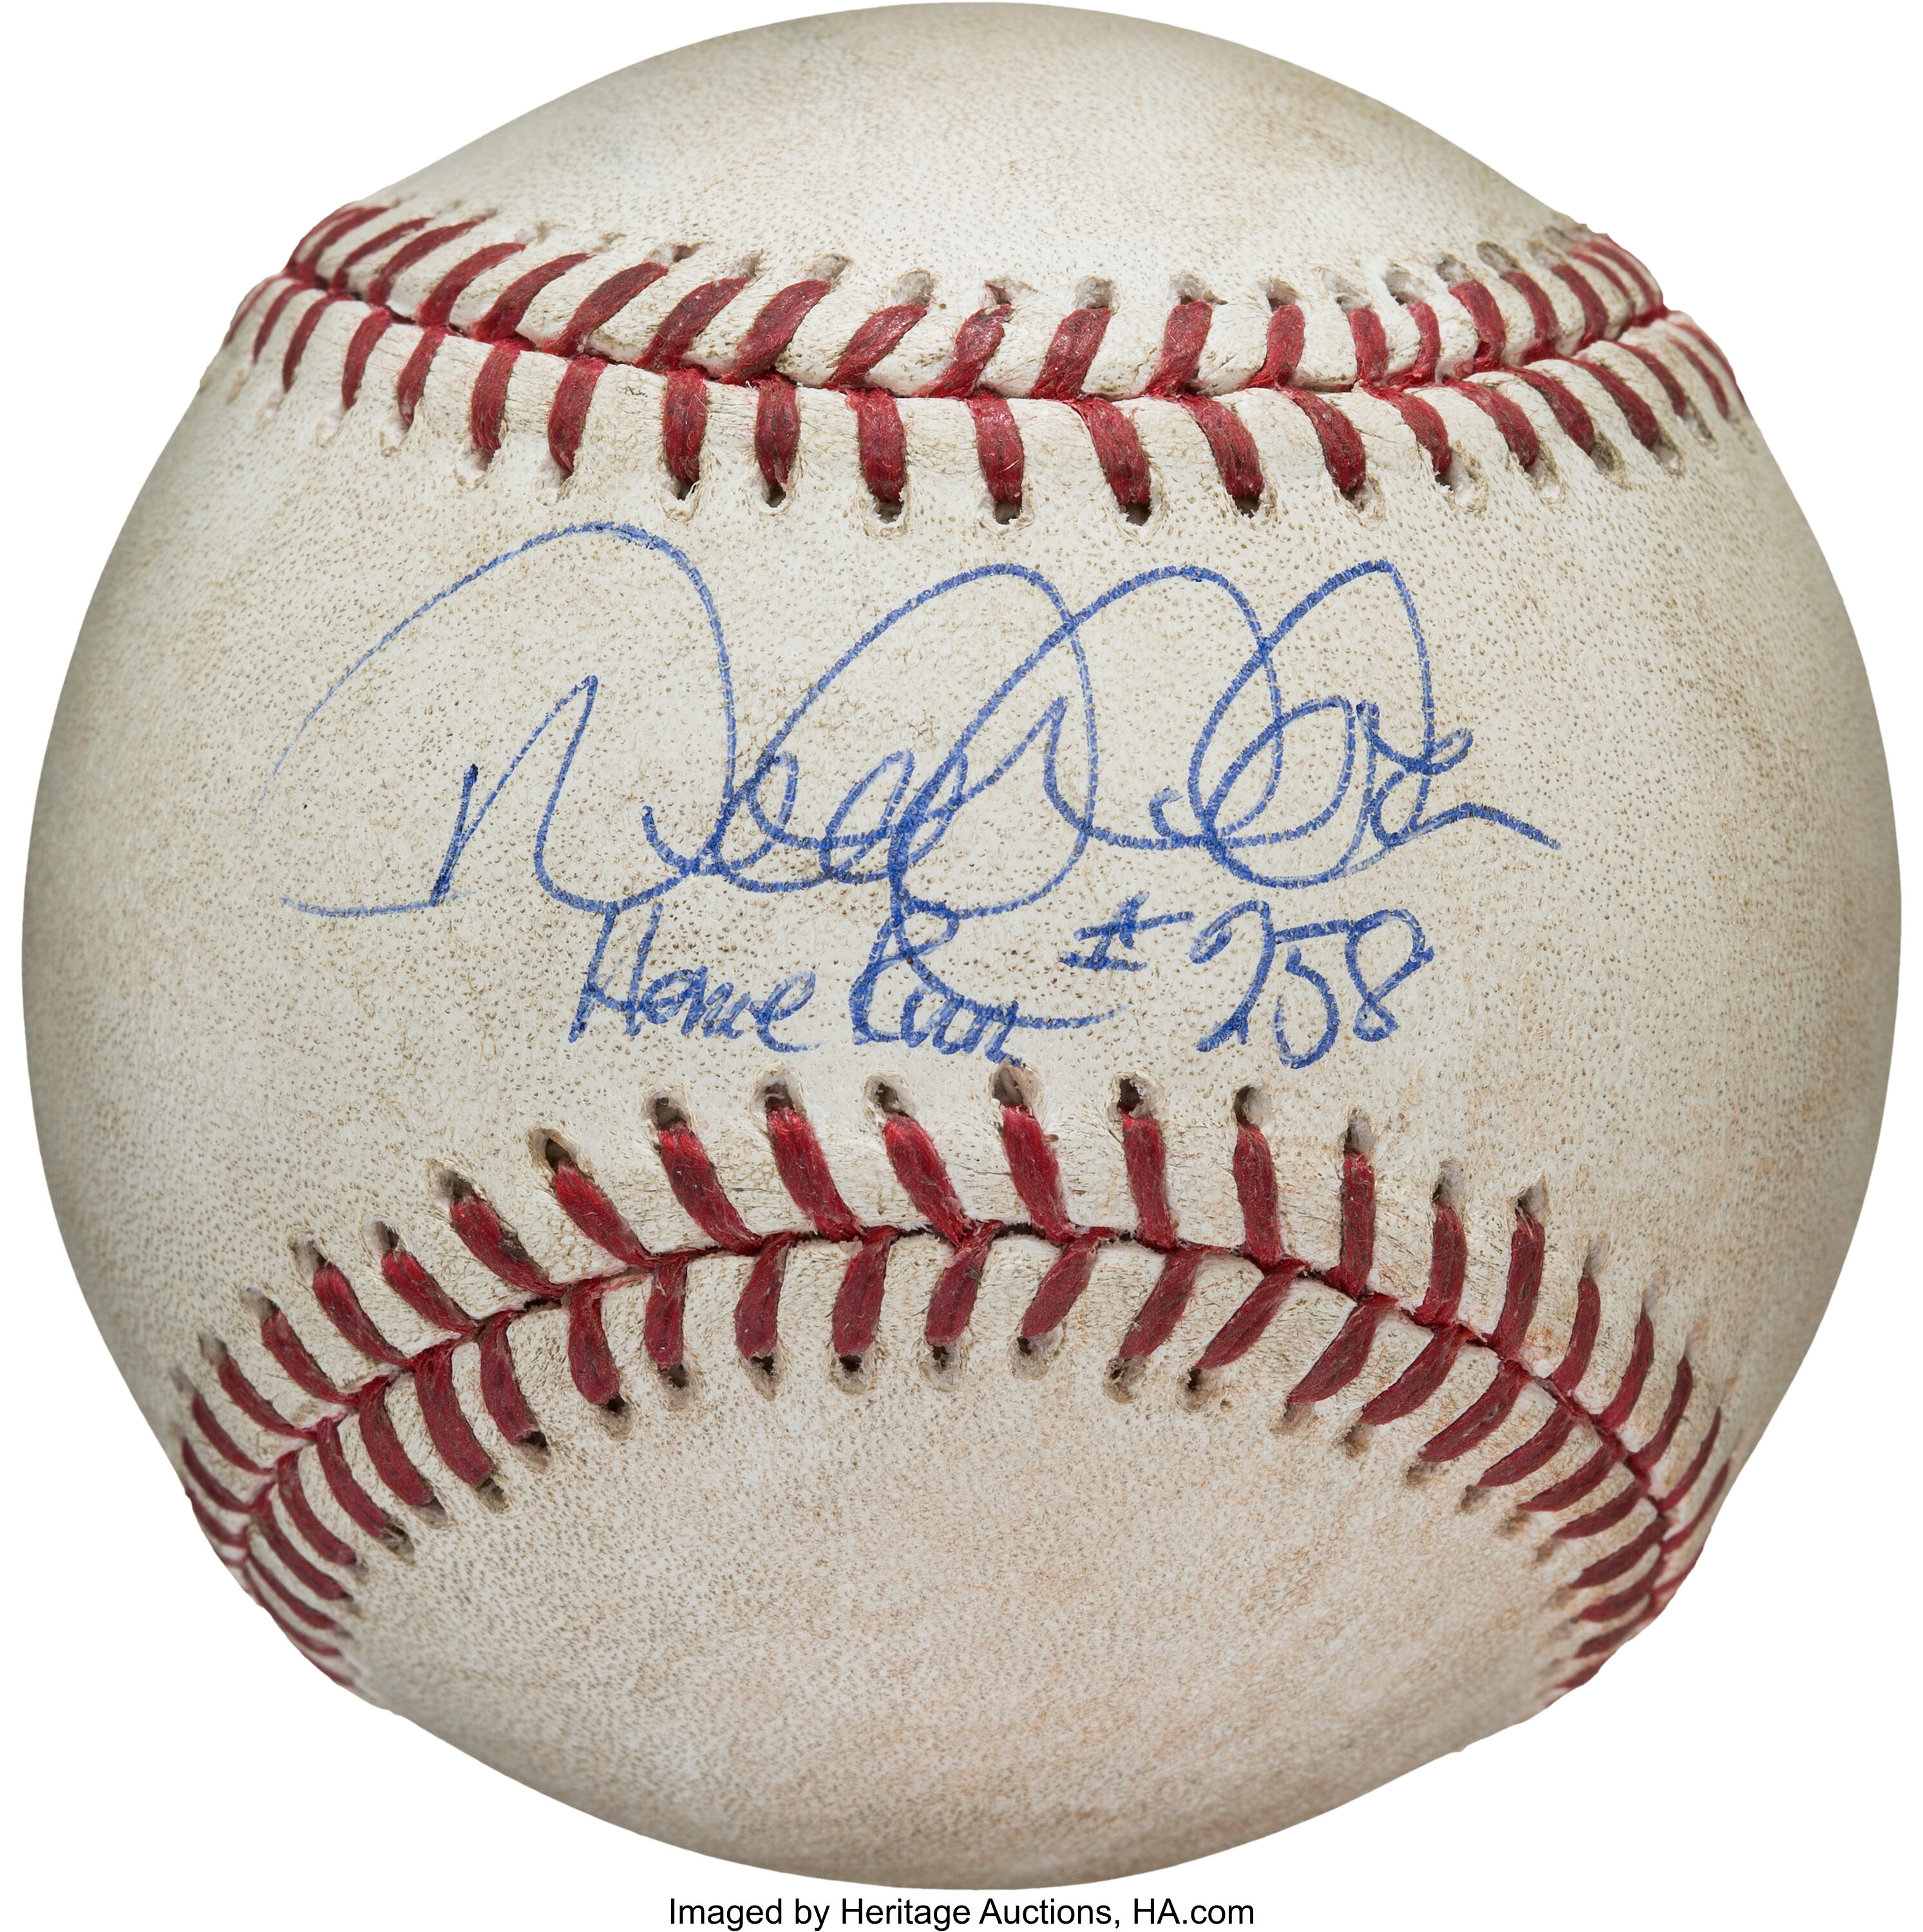 The Evolution of Derek Jeter's Autograph - PSA Blog